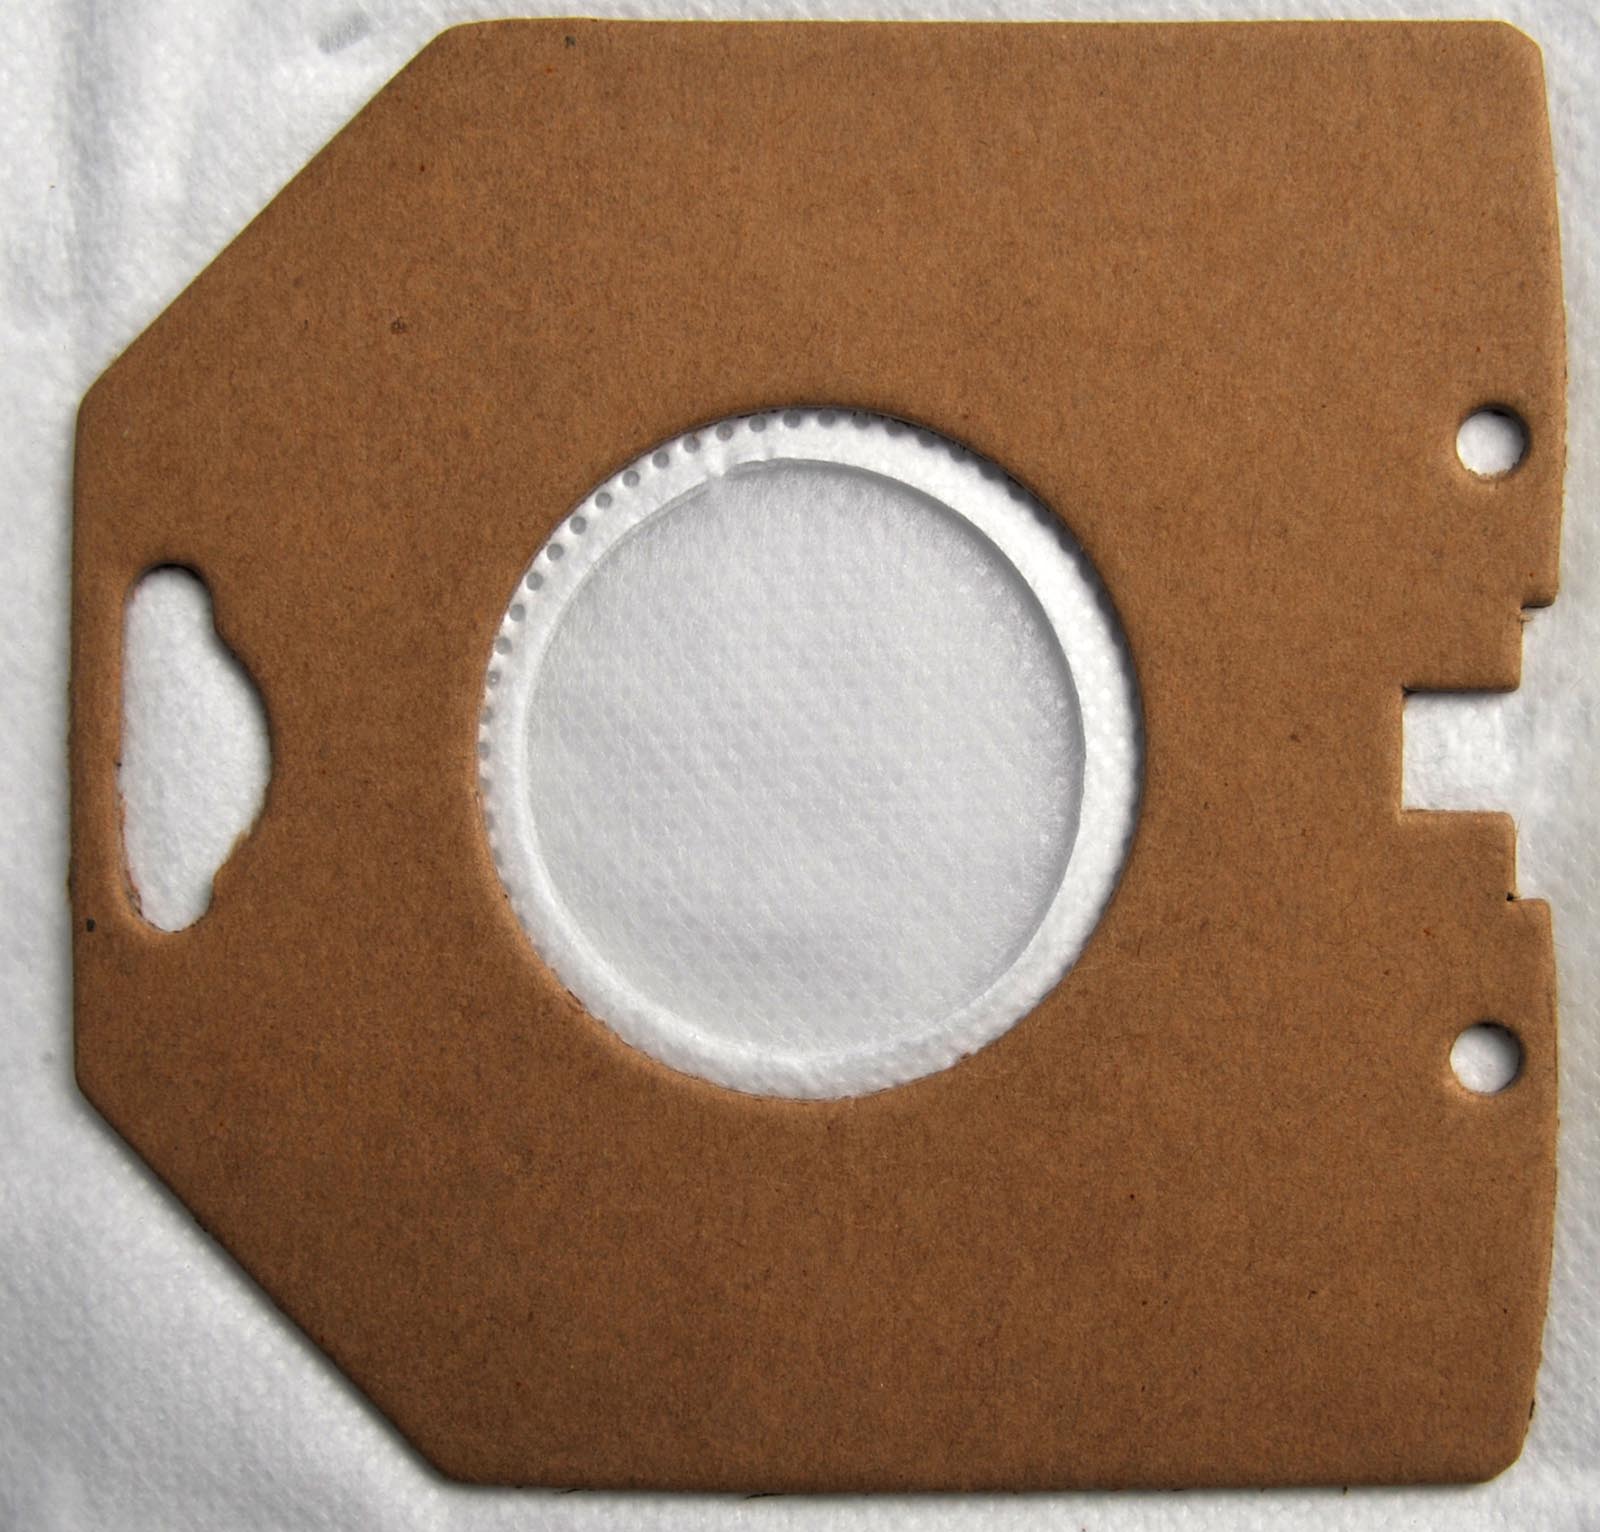 10 Staubsaugerbeutel kompatibel mit ADIX PH 140, 10 Staubbeutel + 2 Mikro-Filter, kompatibel mit Staubsaugerbeutel Swirl PH84